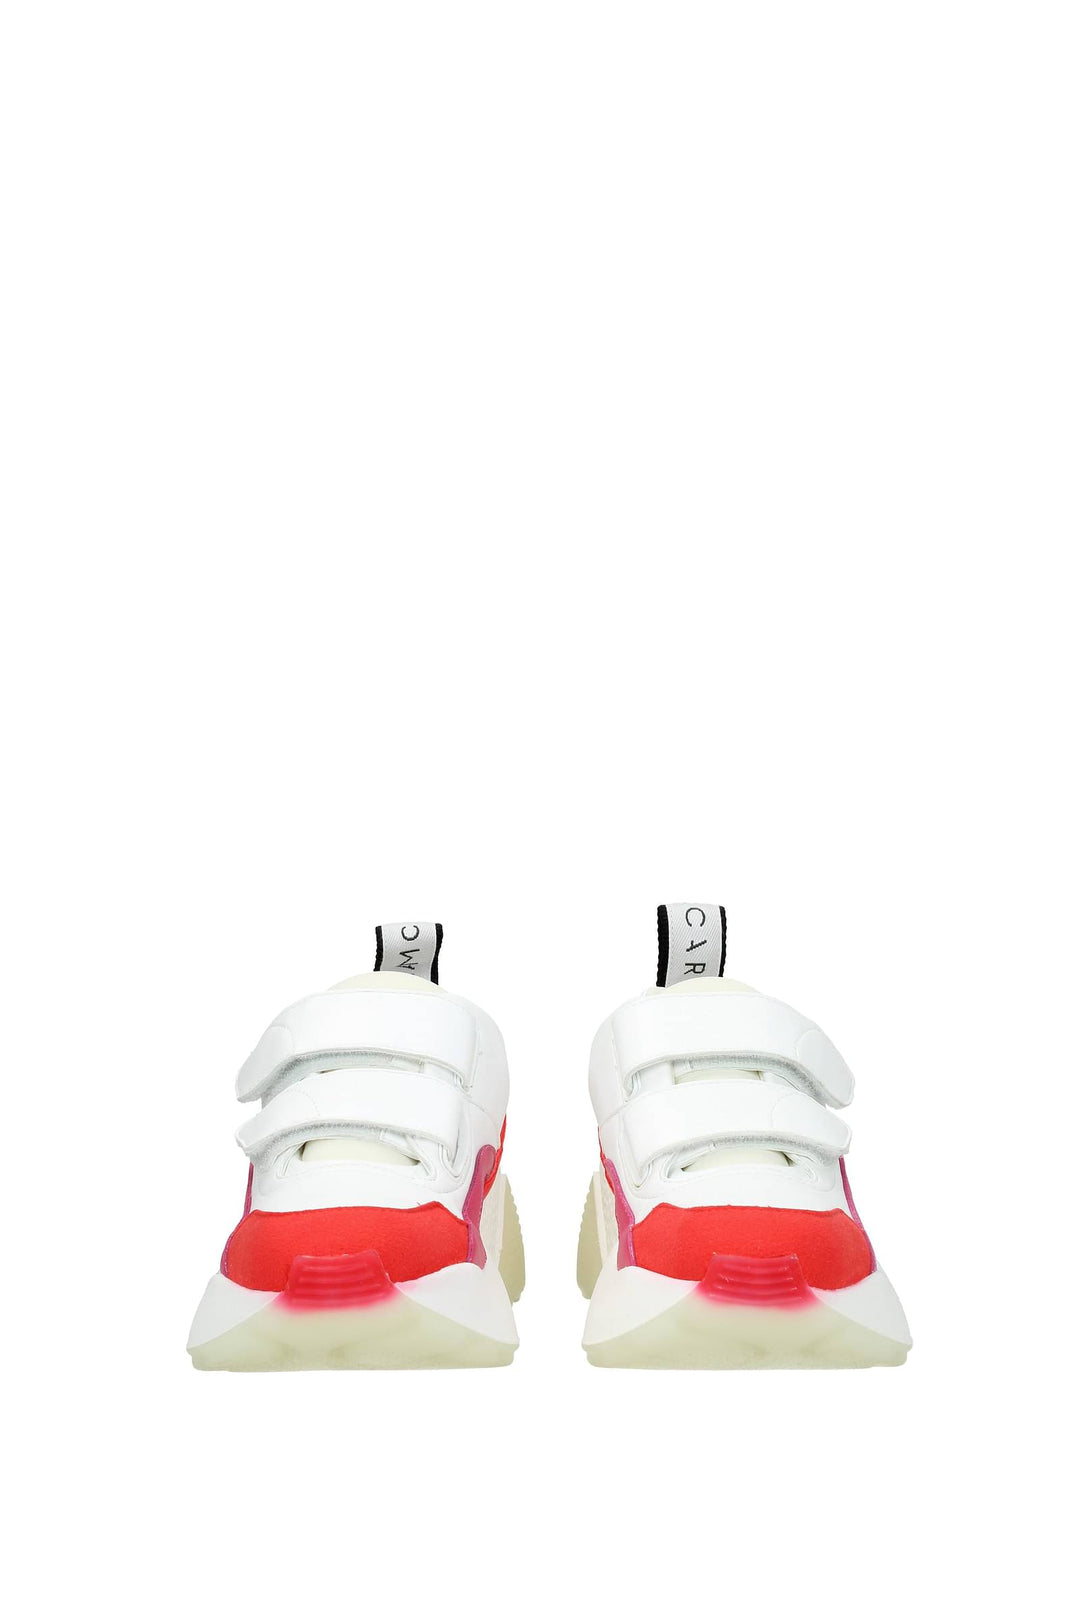 Sneakers Eco Pelle Bianco Rosso - Stella McCartney - Donna